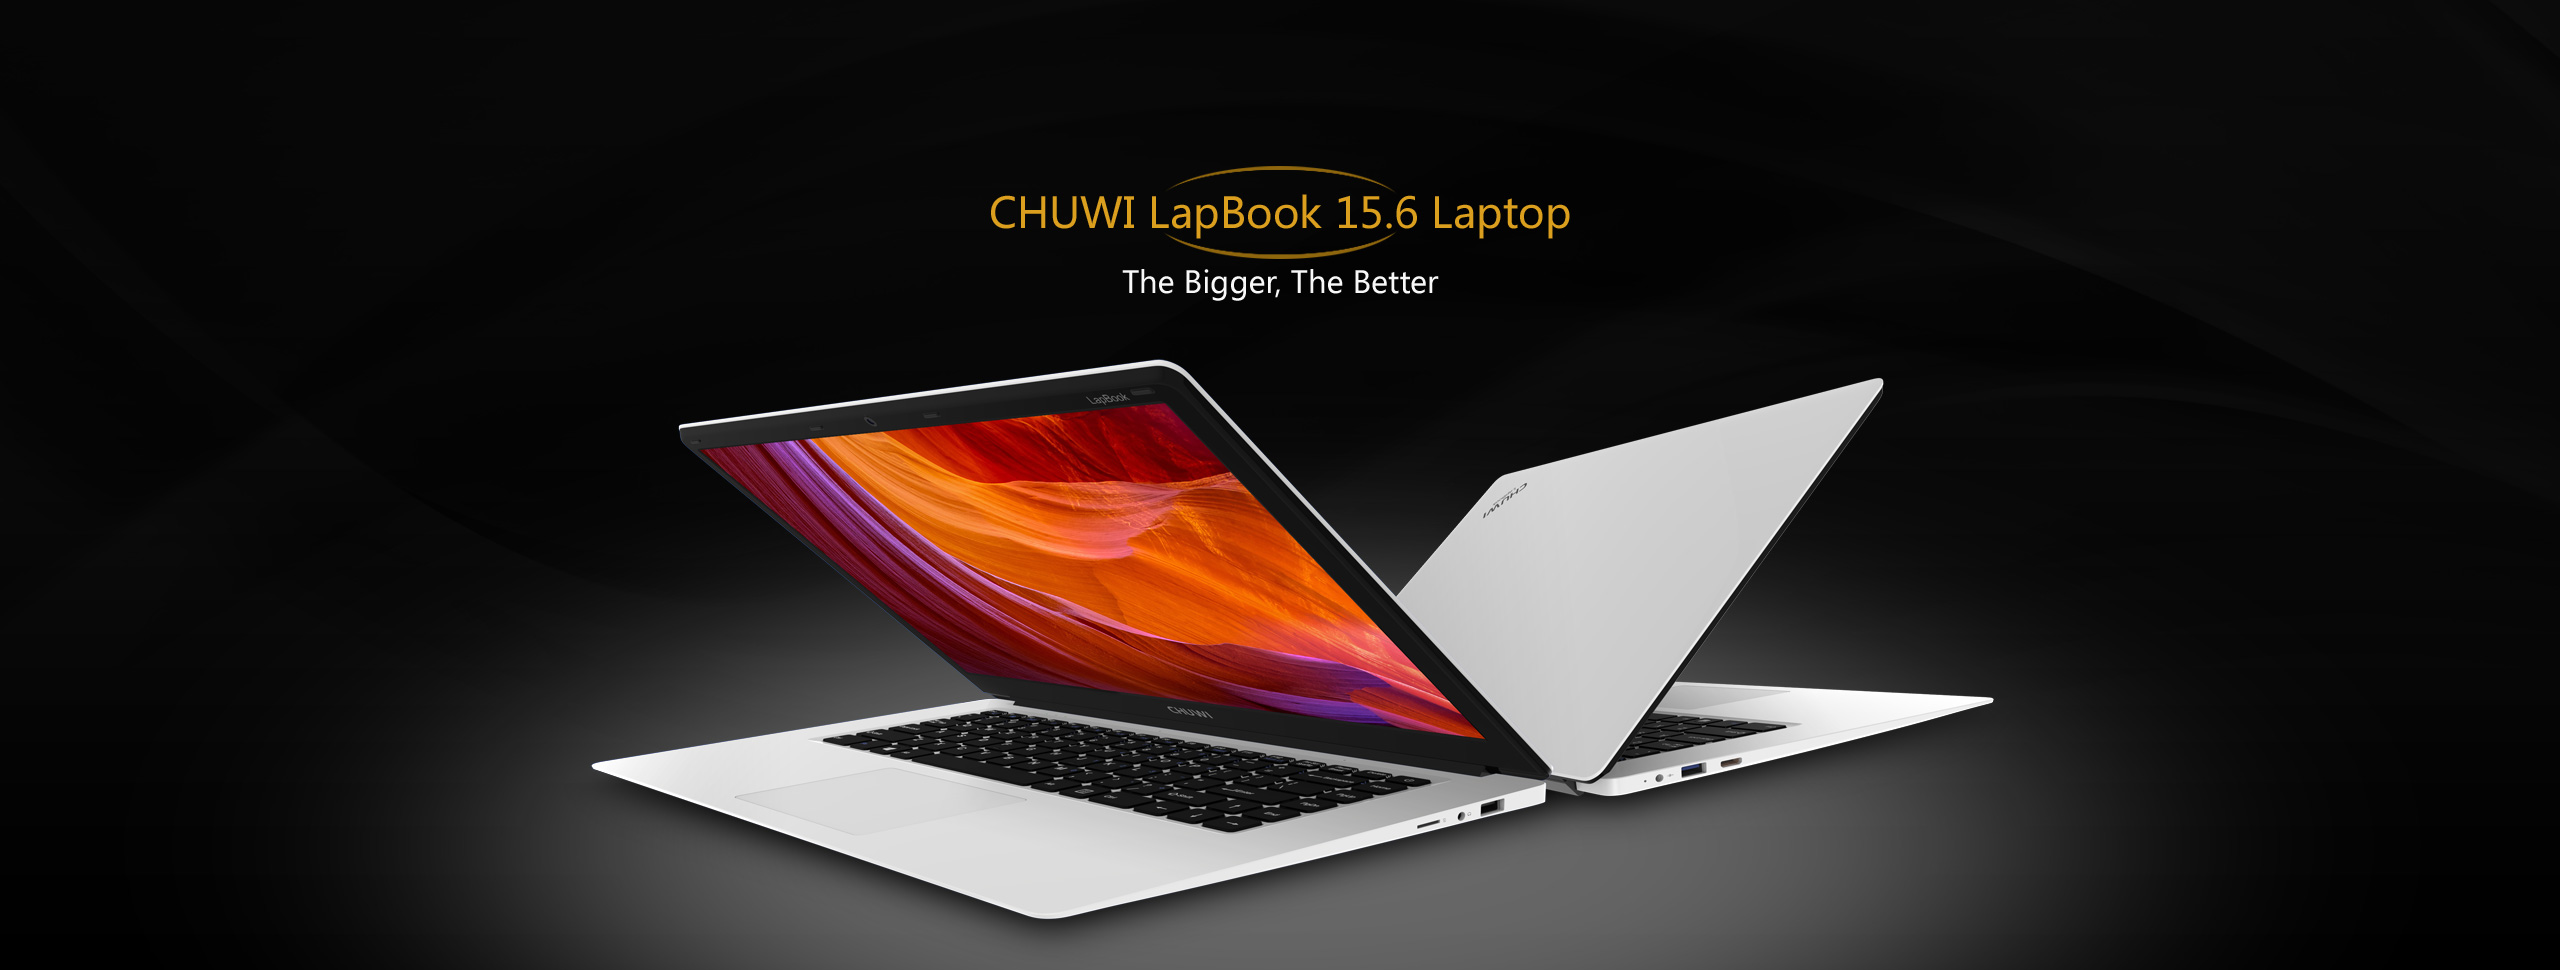 chuwi-lapbook-windows-10-laptop